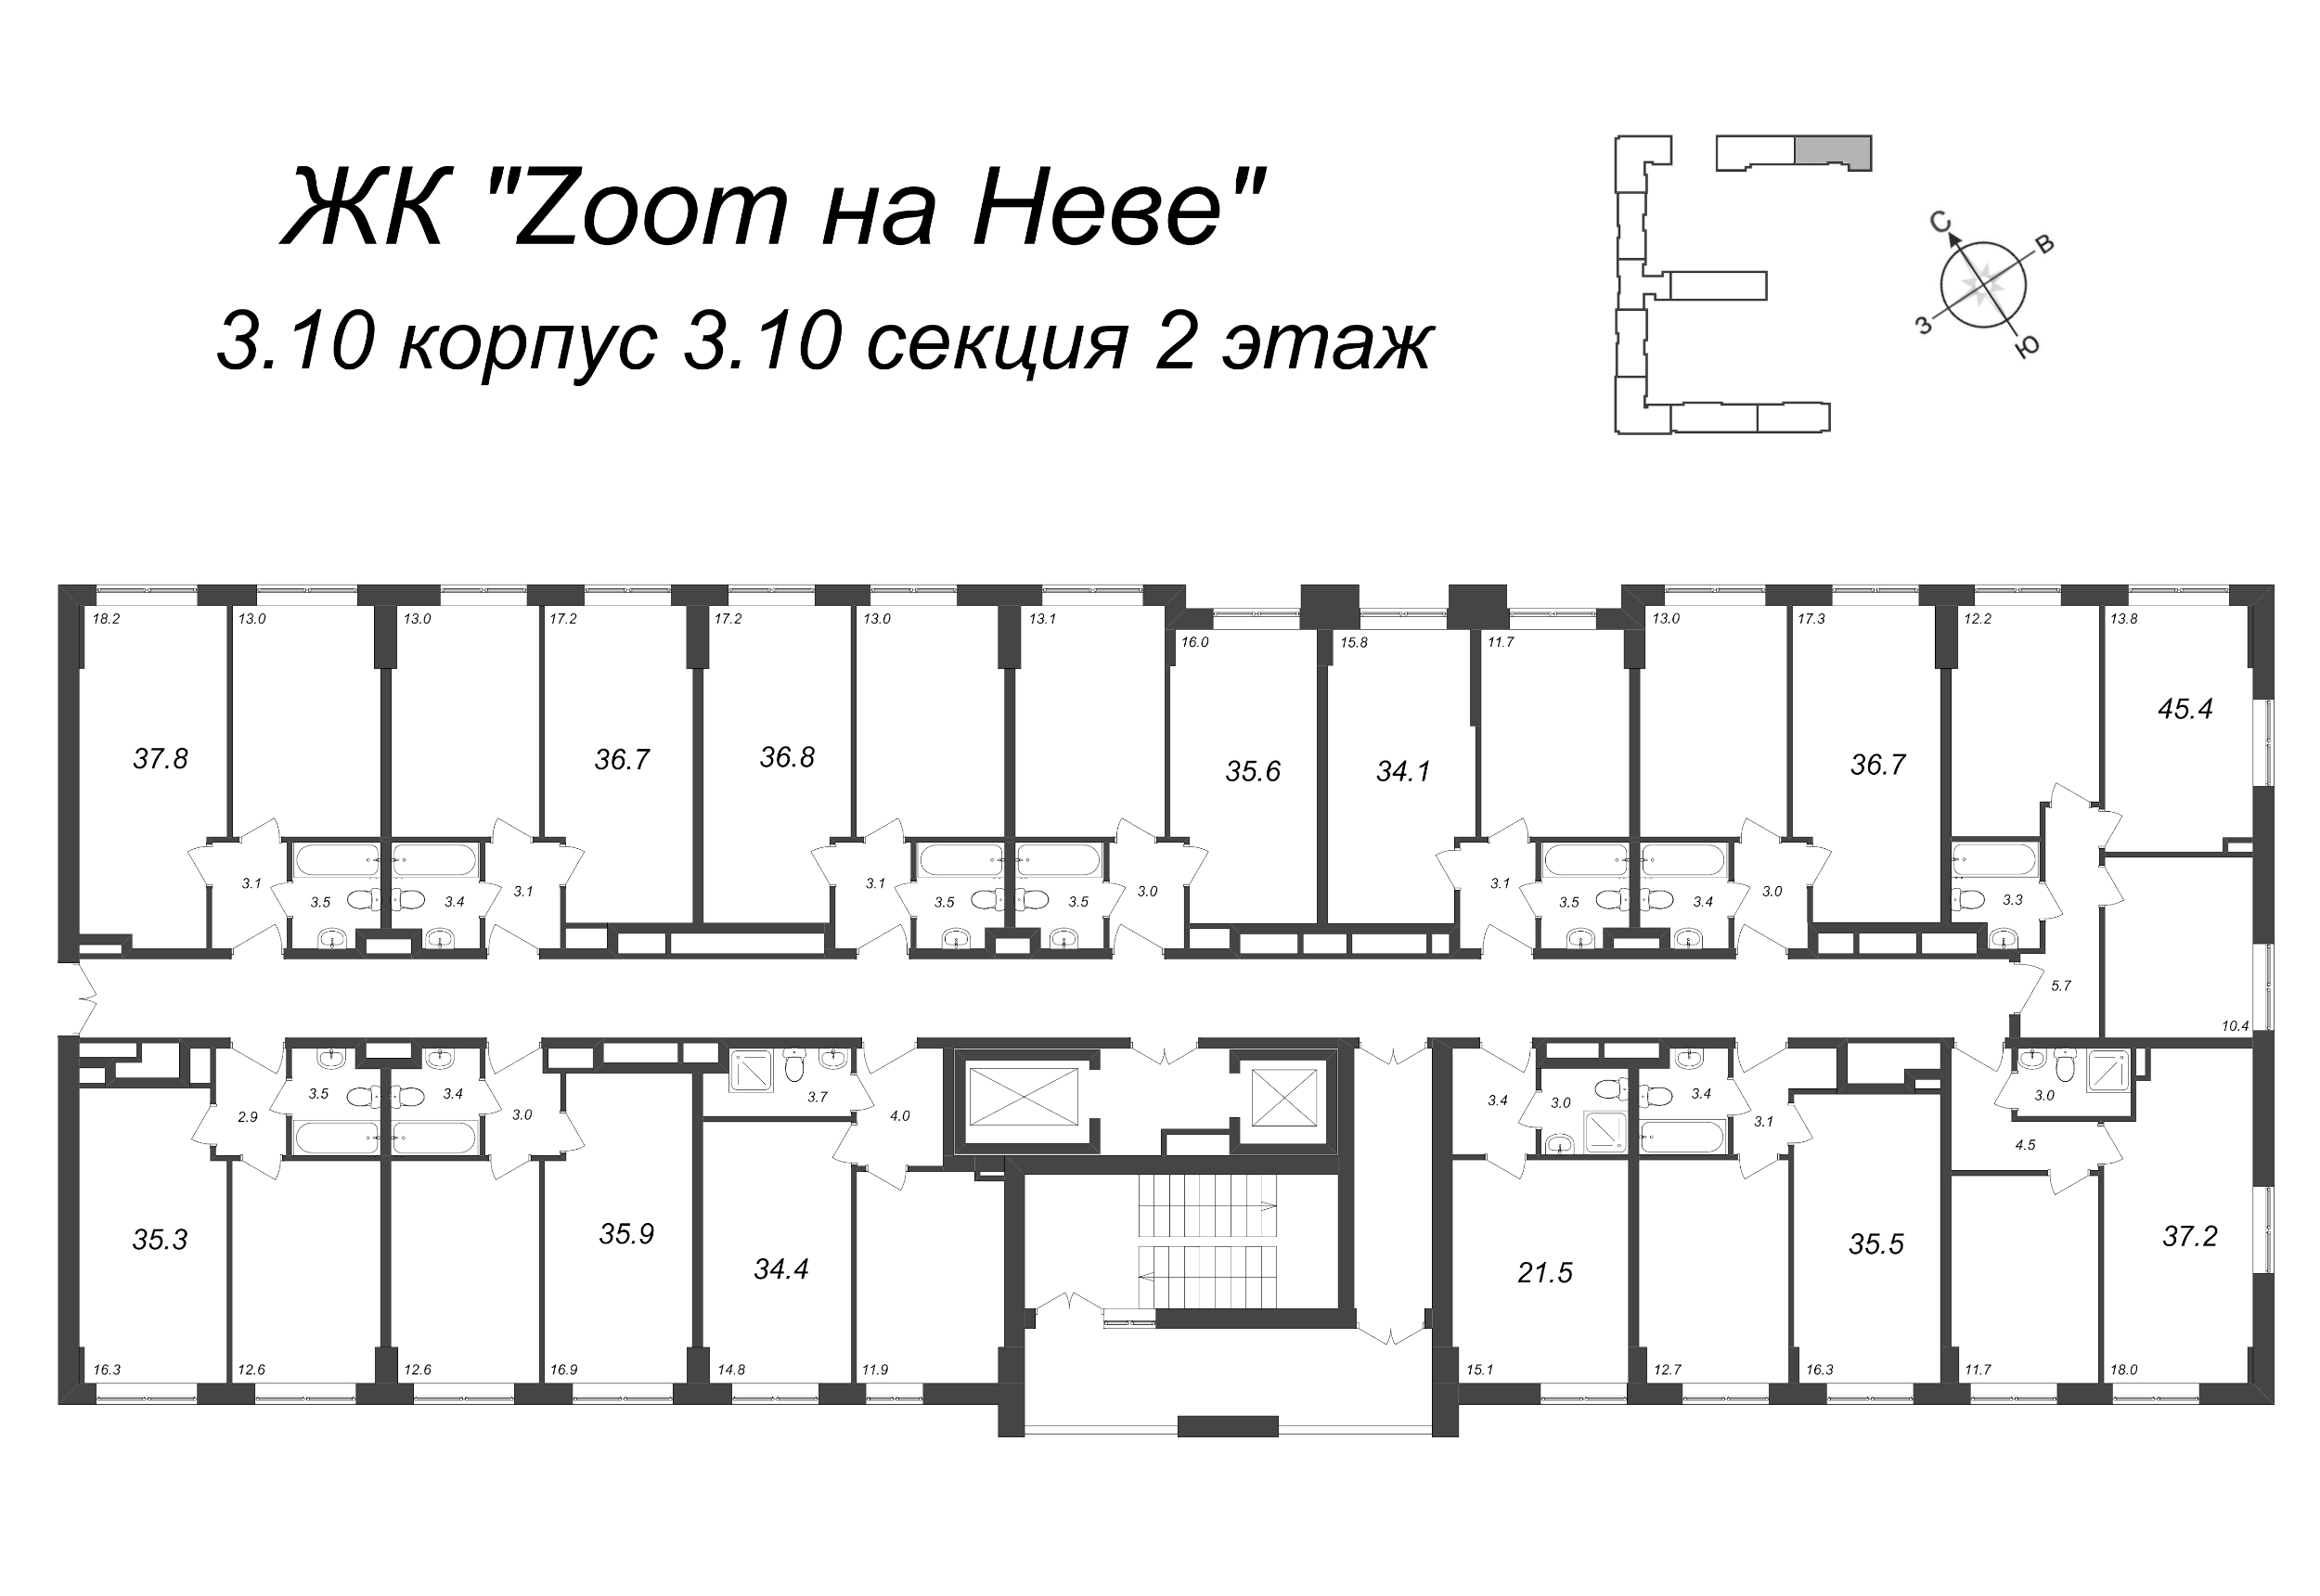 2-комнатная (Евро) квартира, 35.97 м² - планировка этажа